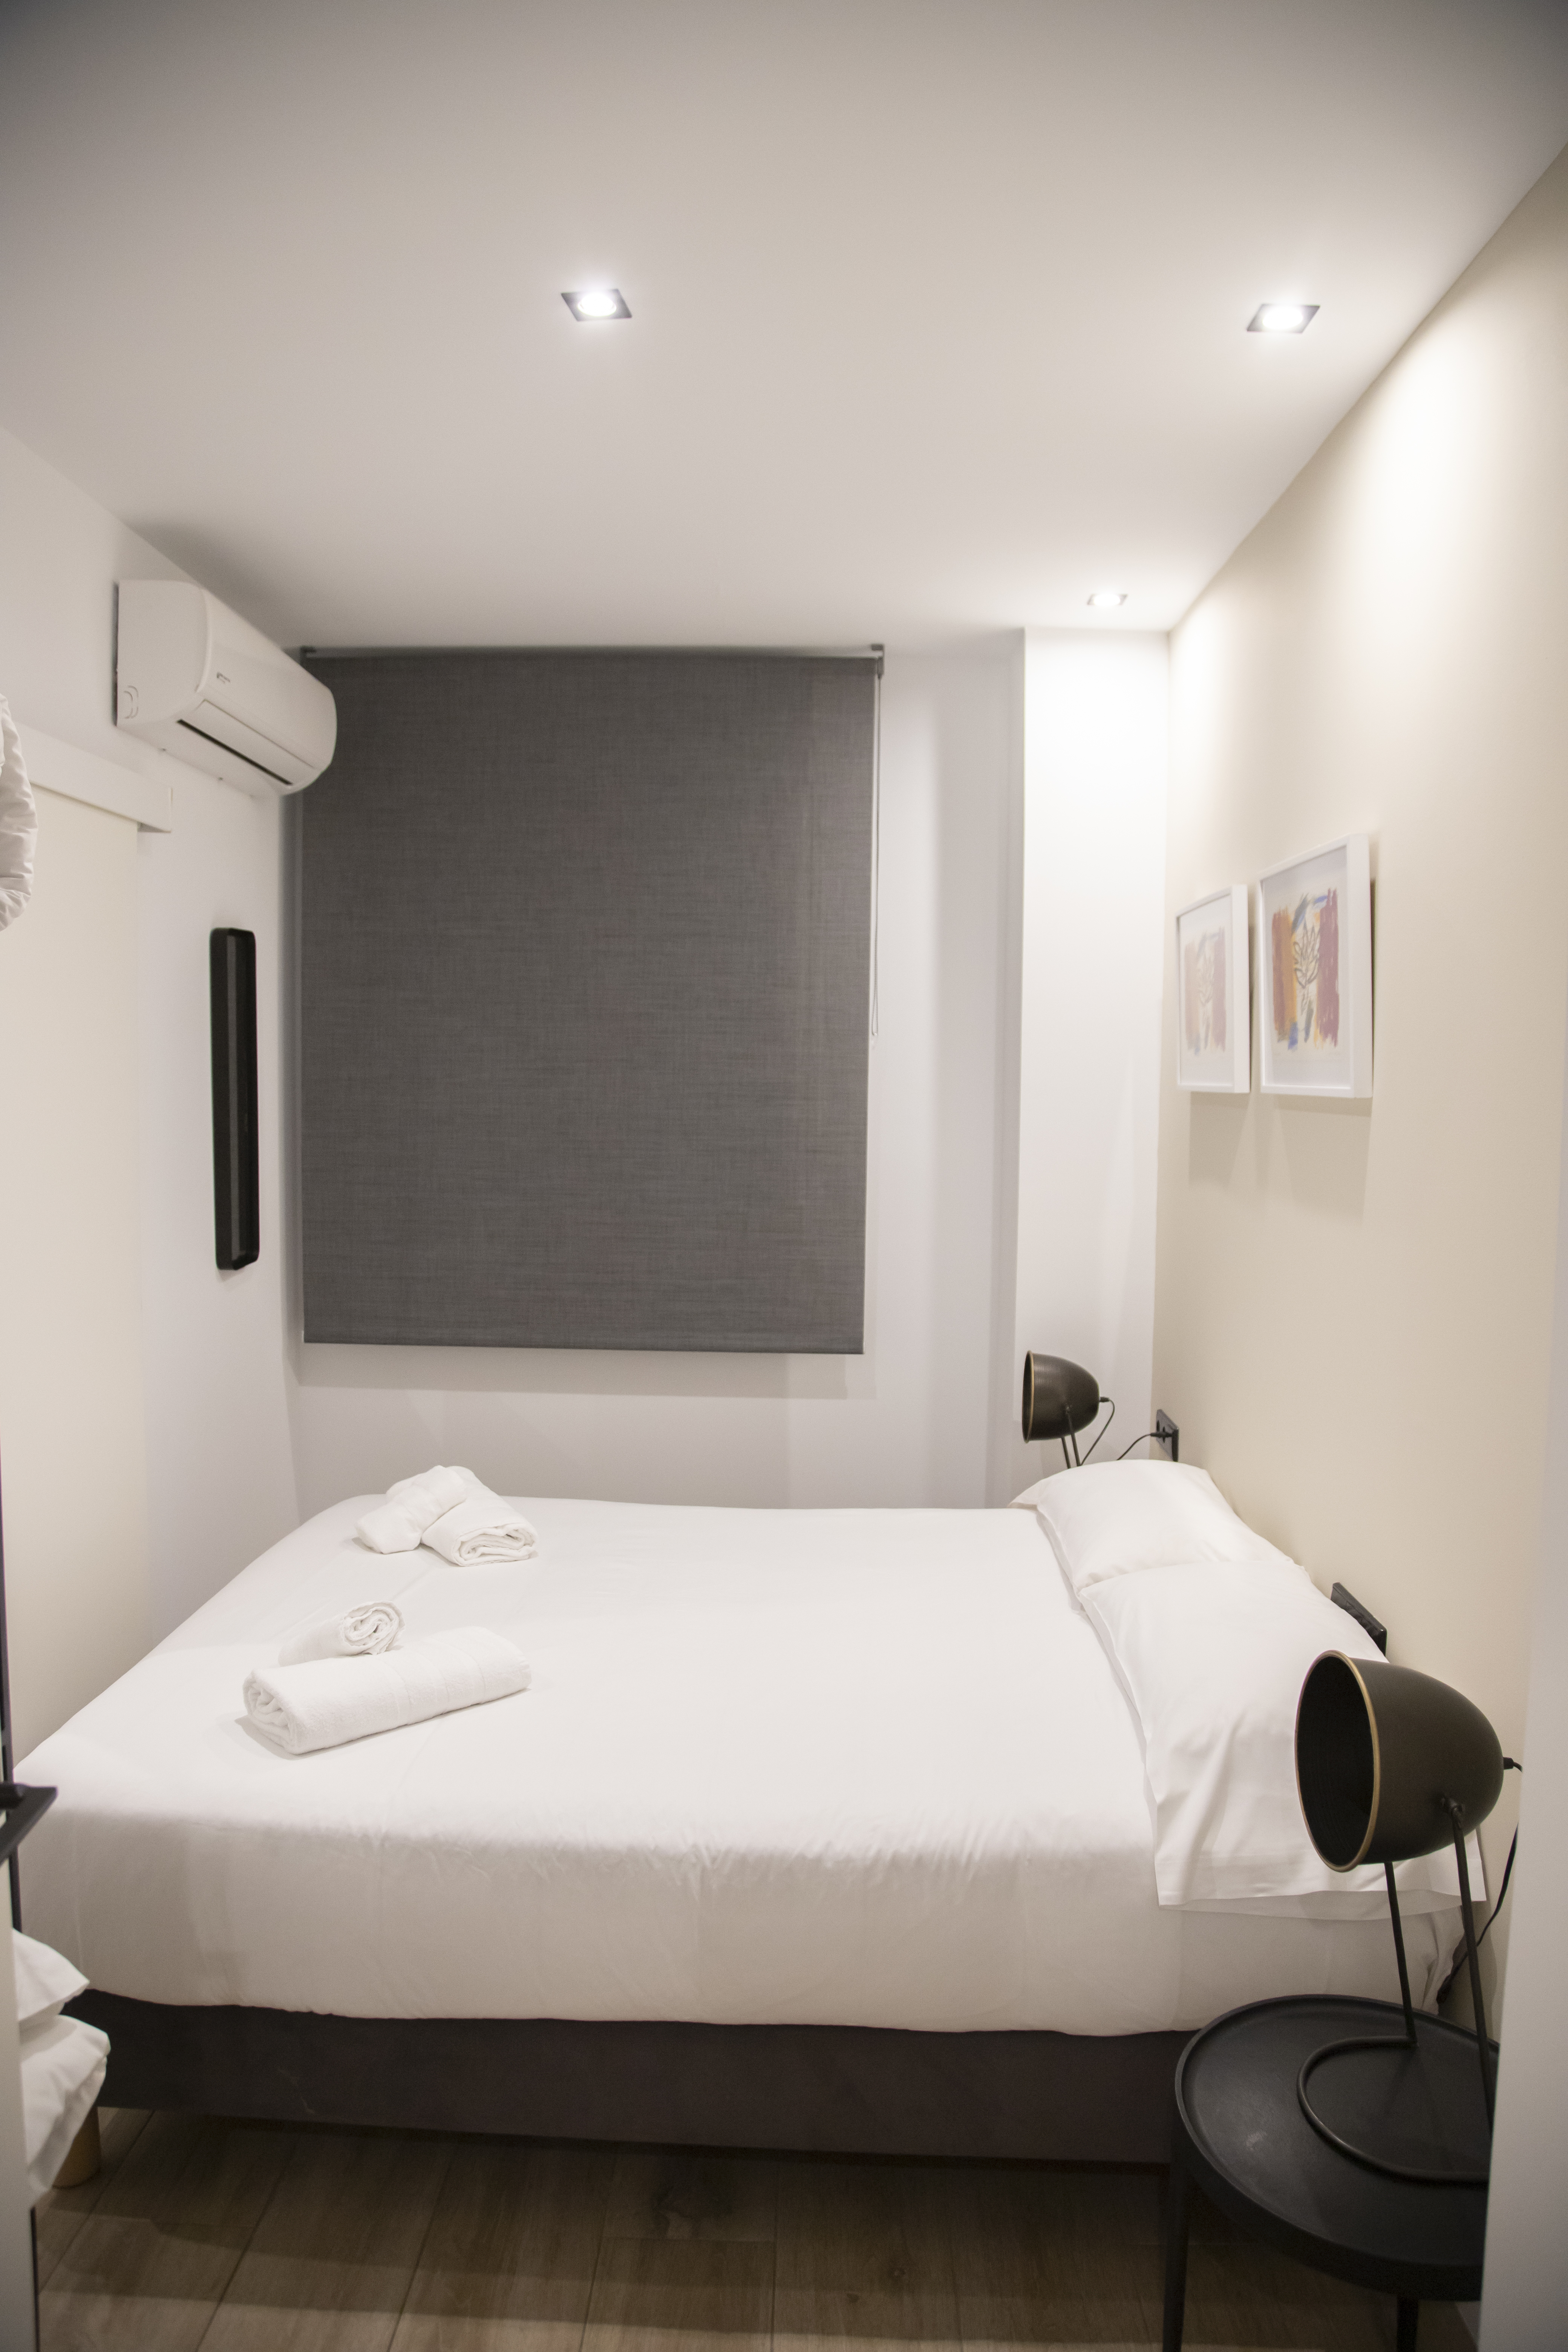 2T one bedroom apartment in the heart of the city 60 VLC HOST: Alquiler apartamentos corta duración